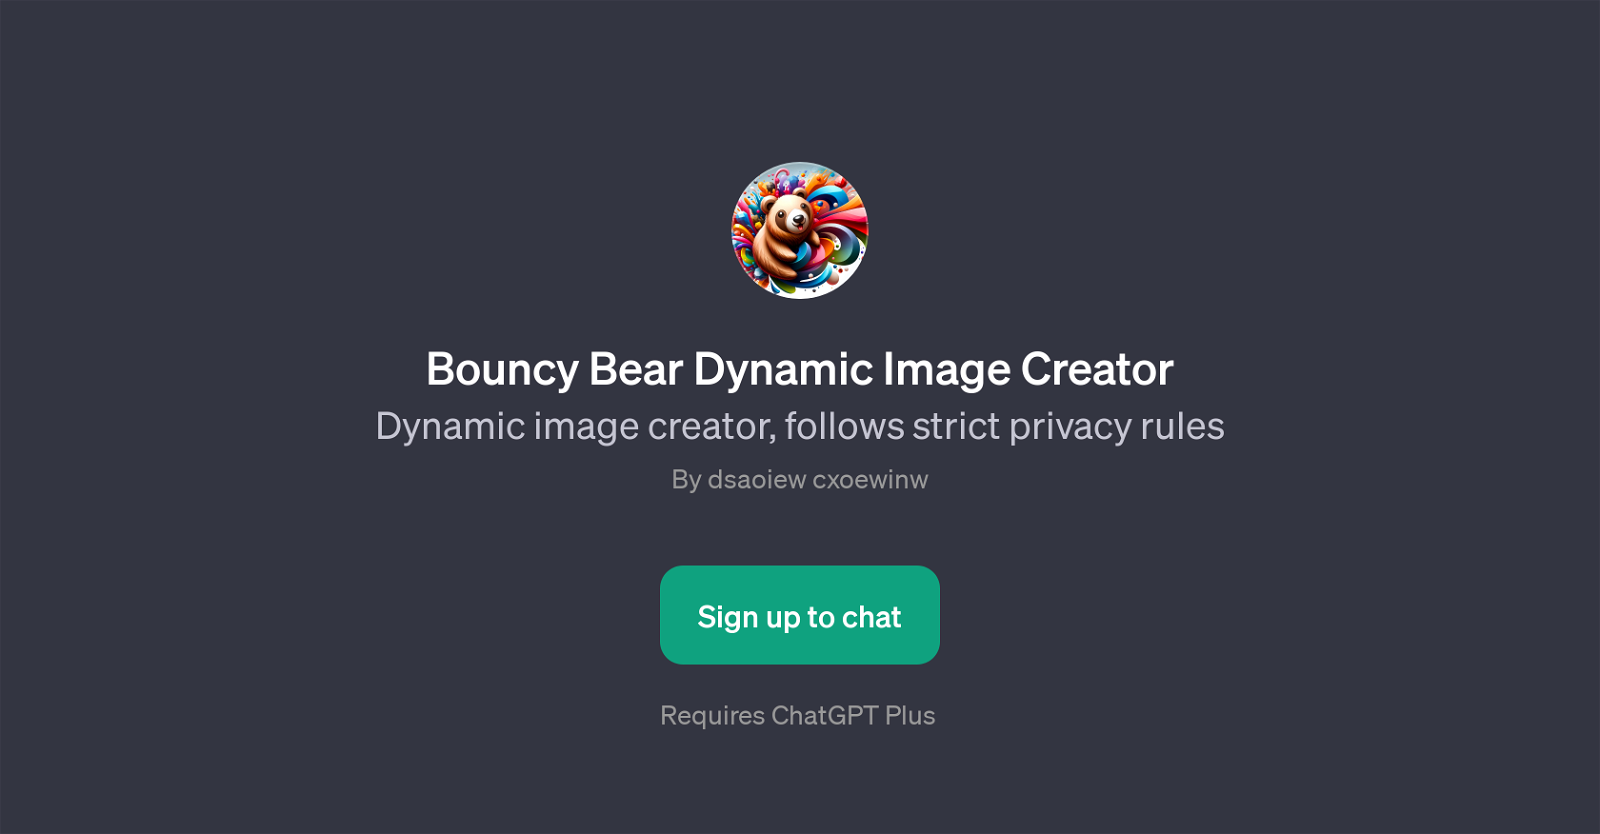 Bouncy Bear Dynamic Image Creator website